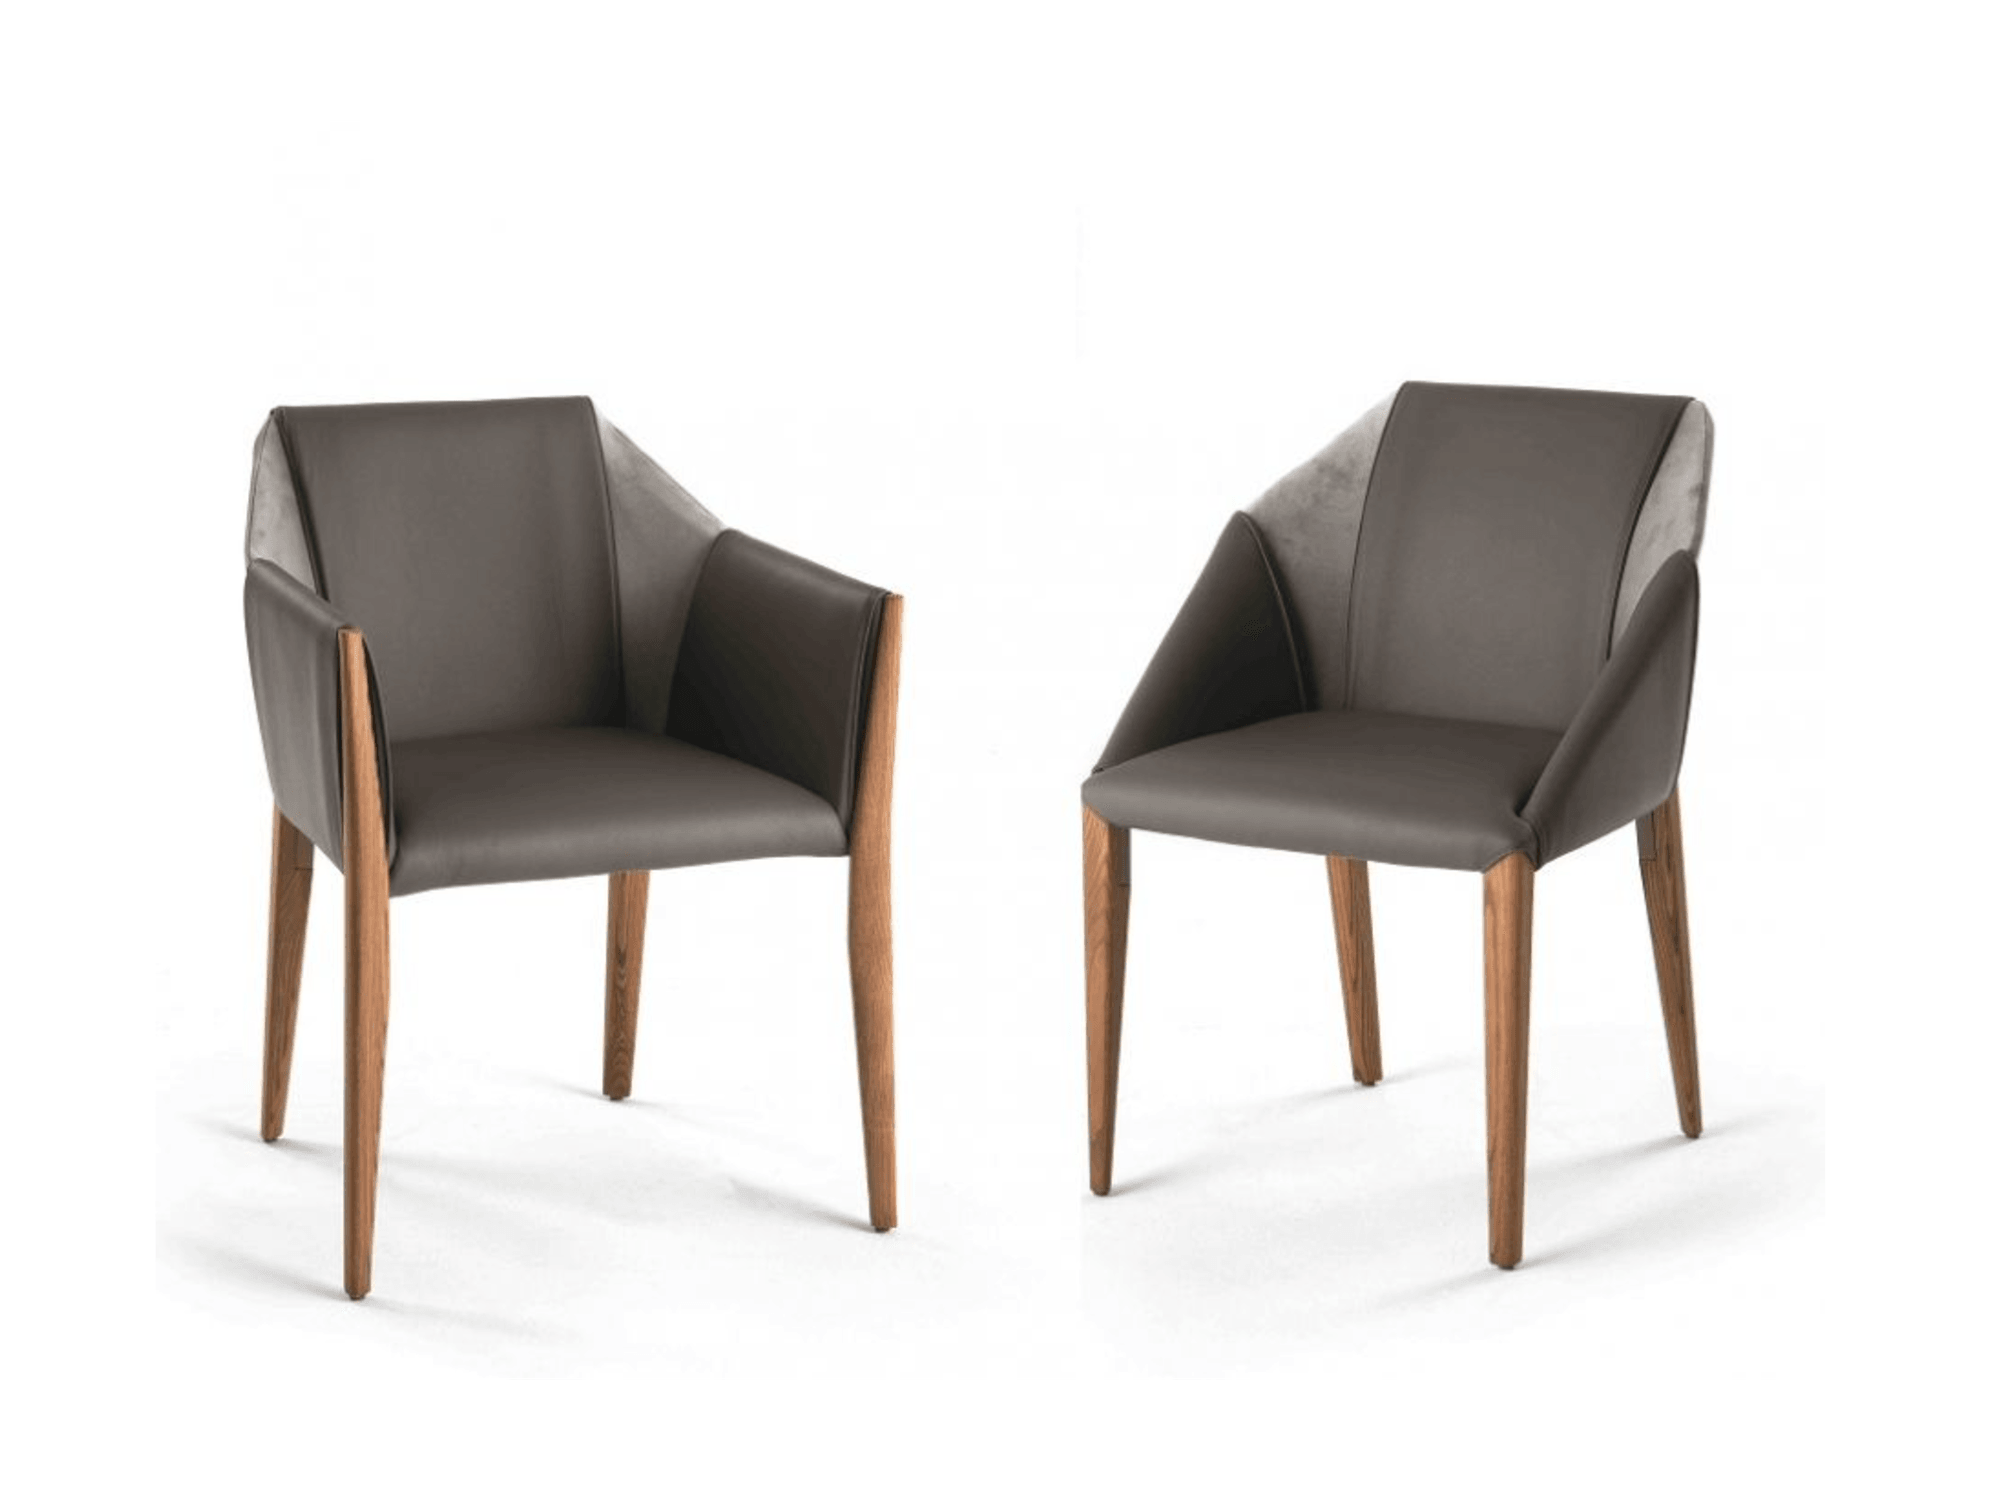 Svena Dining Chair - Euro Living Furniture